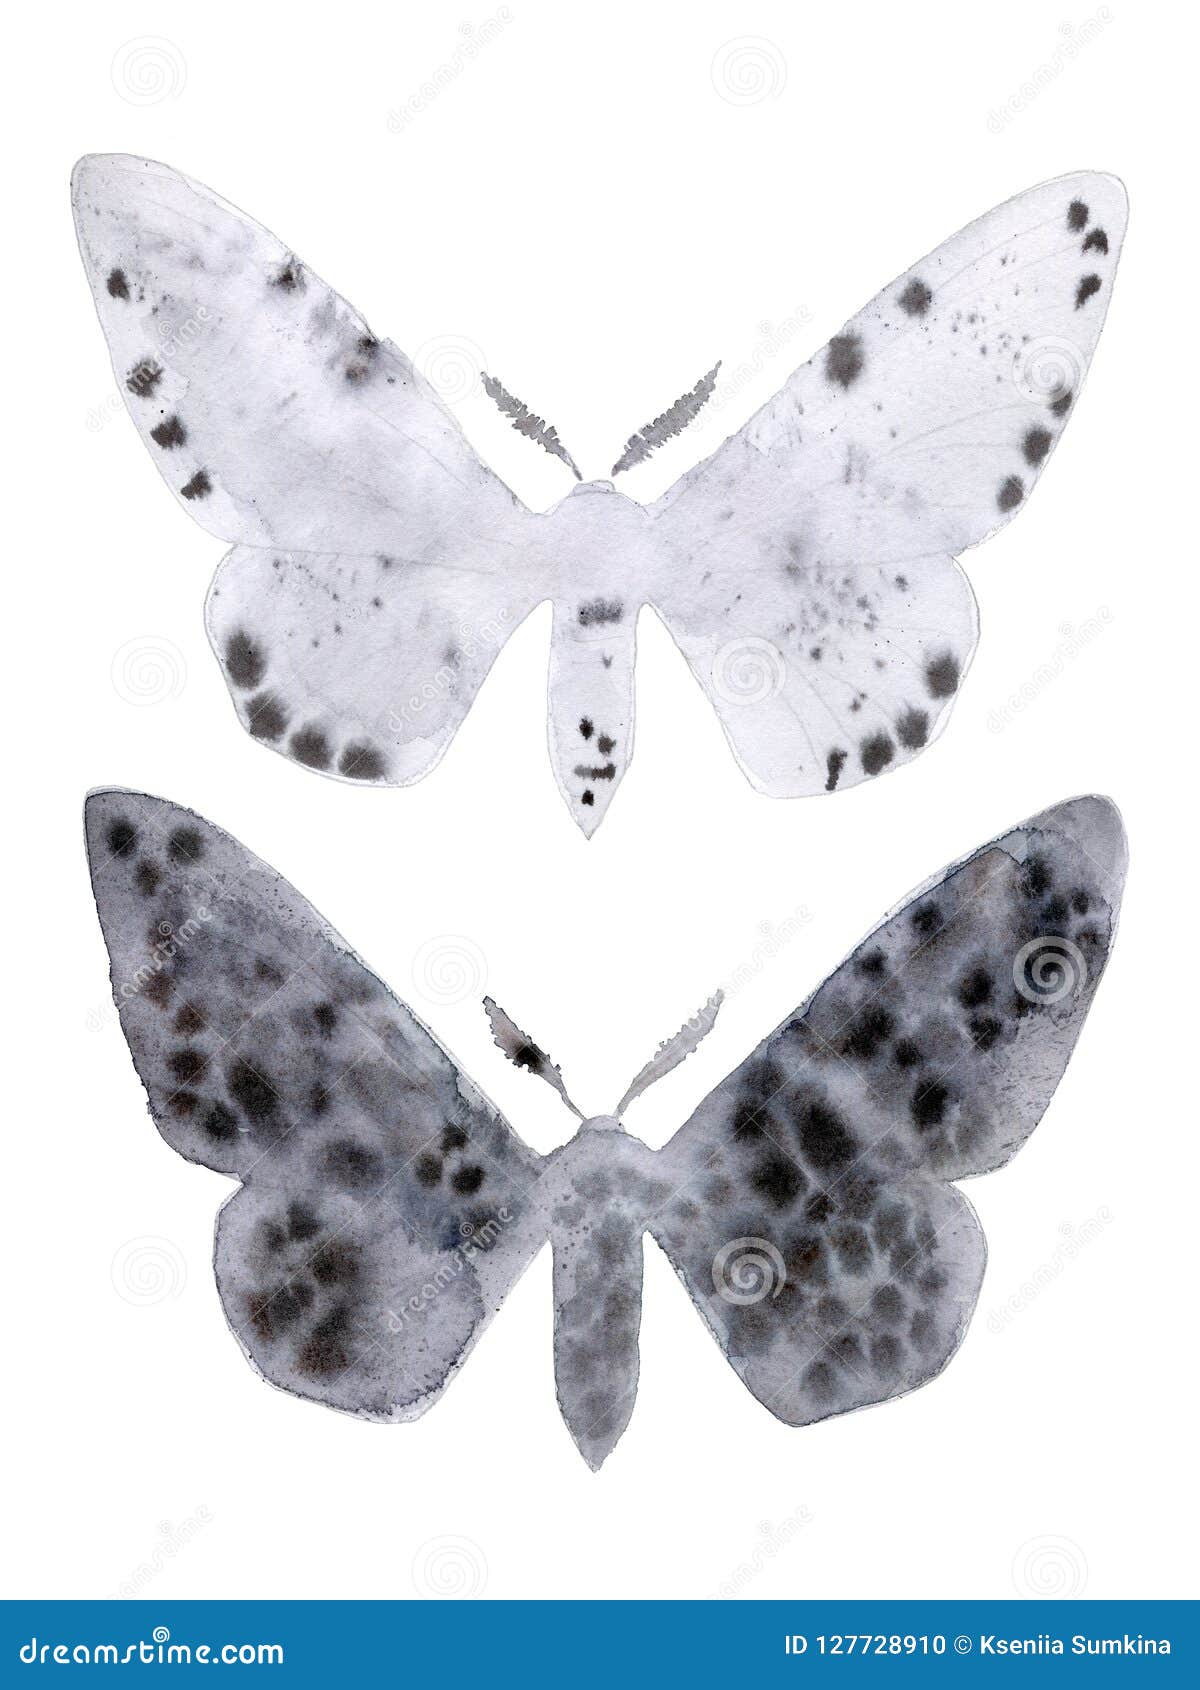 peppered moth melanic and light form on white.